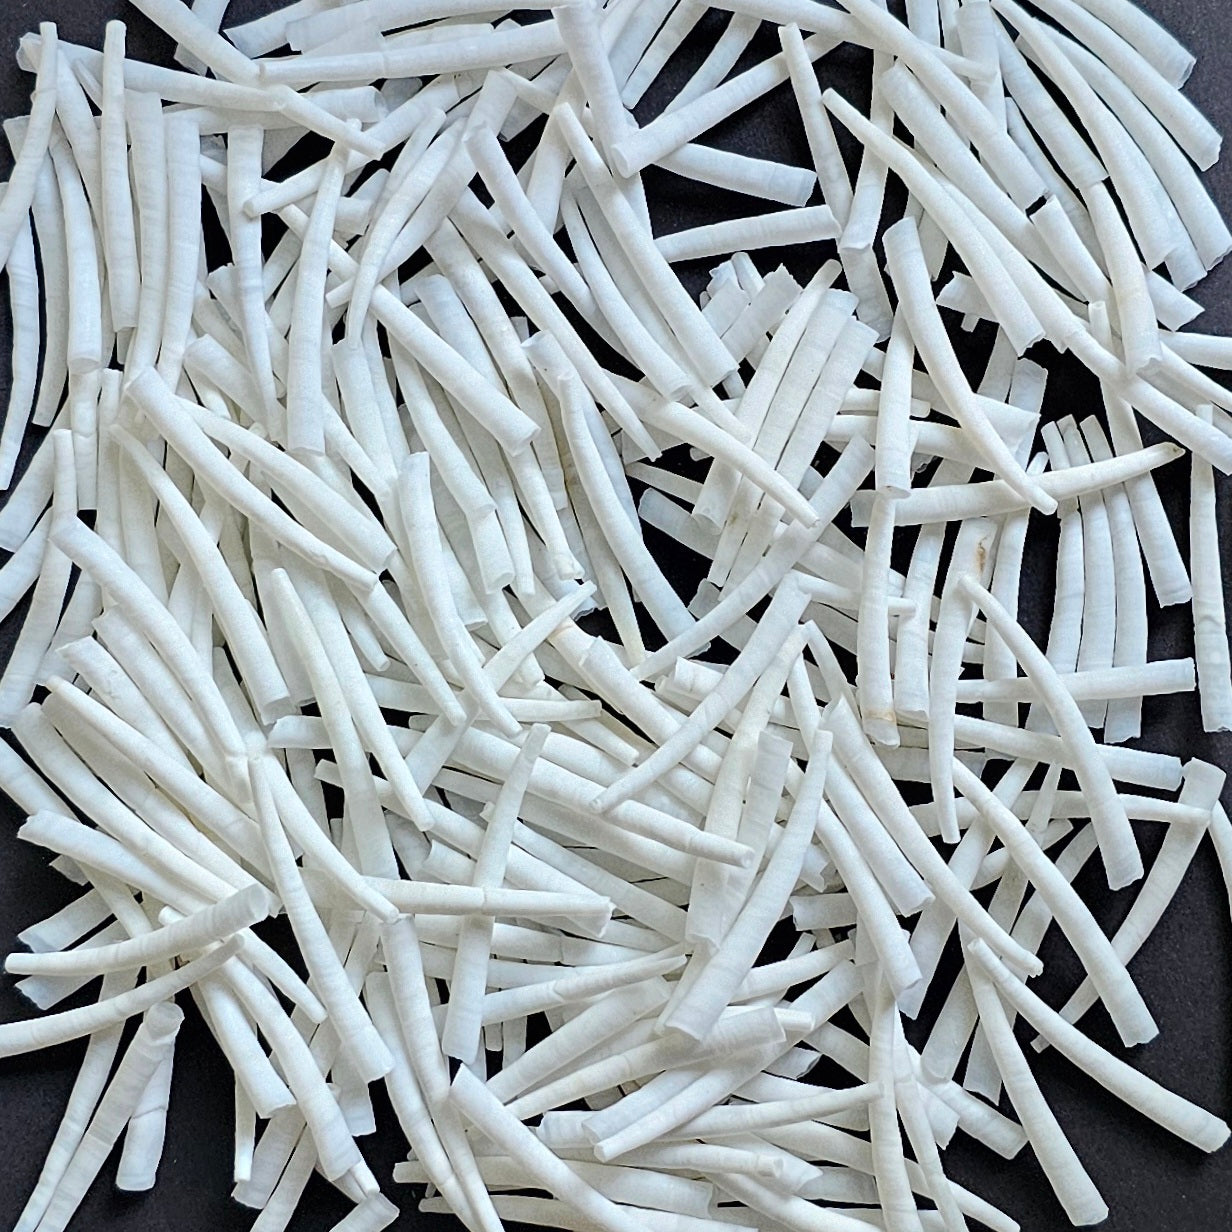 1.75-2" Smooth Dentalium Shells - 250 grams